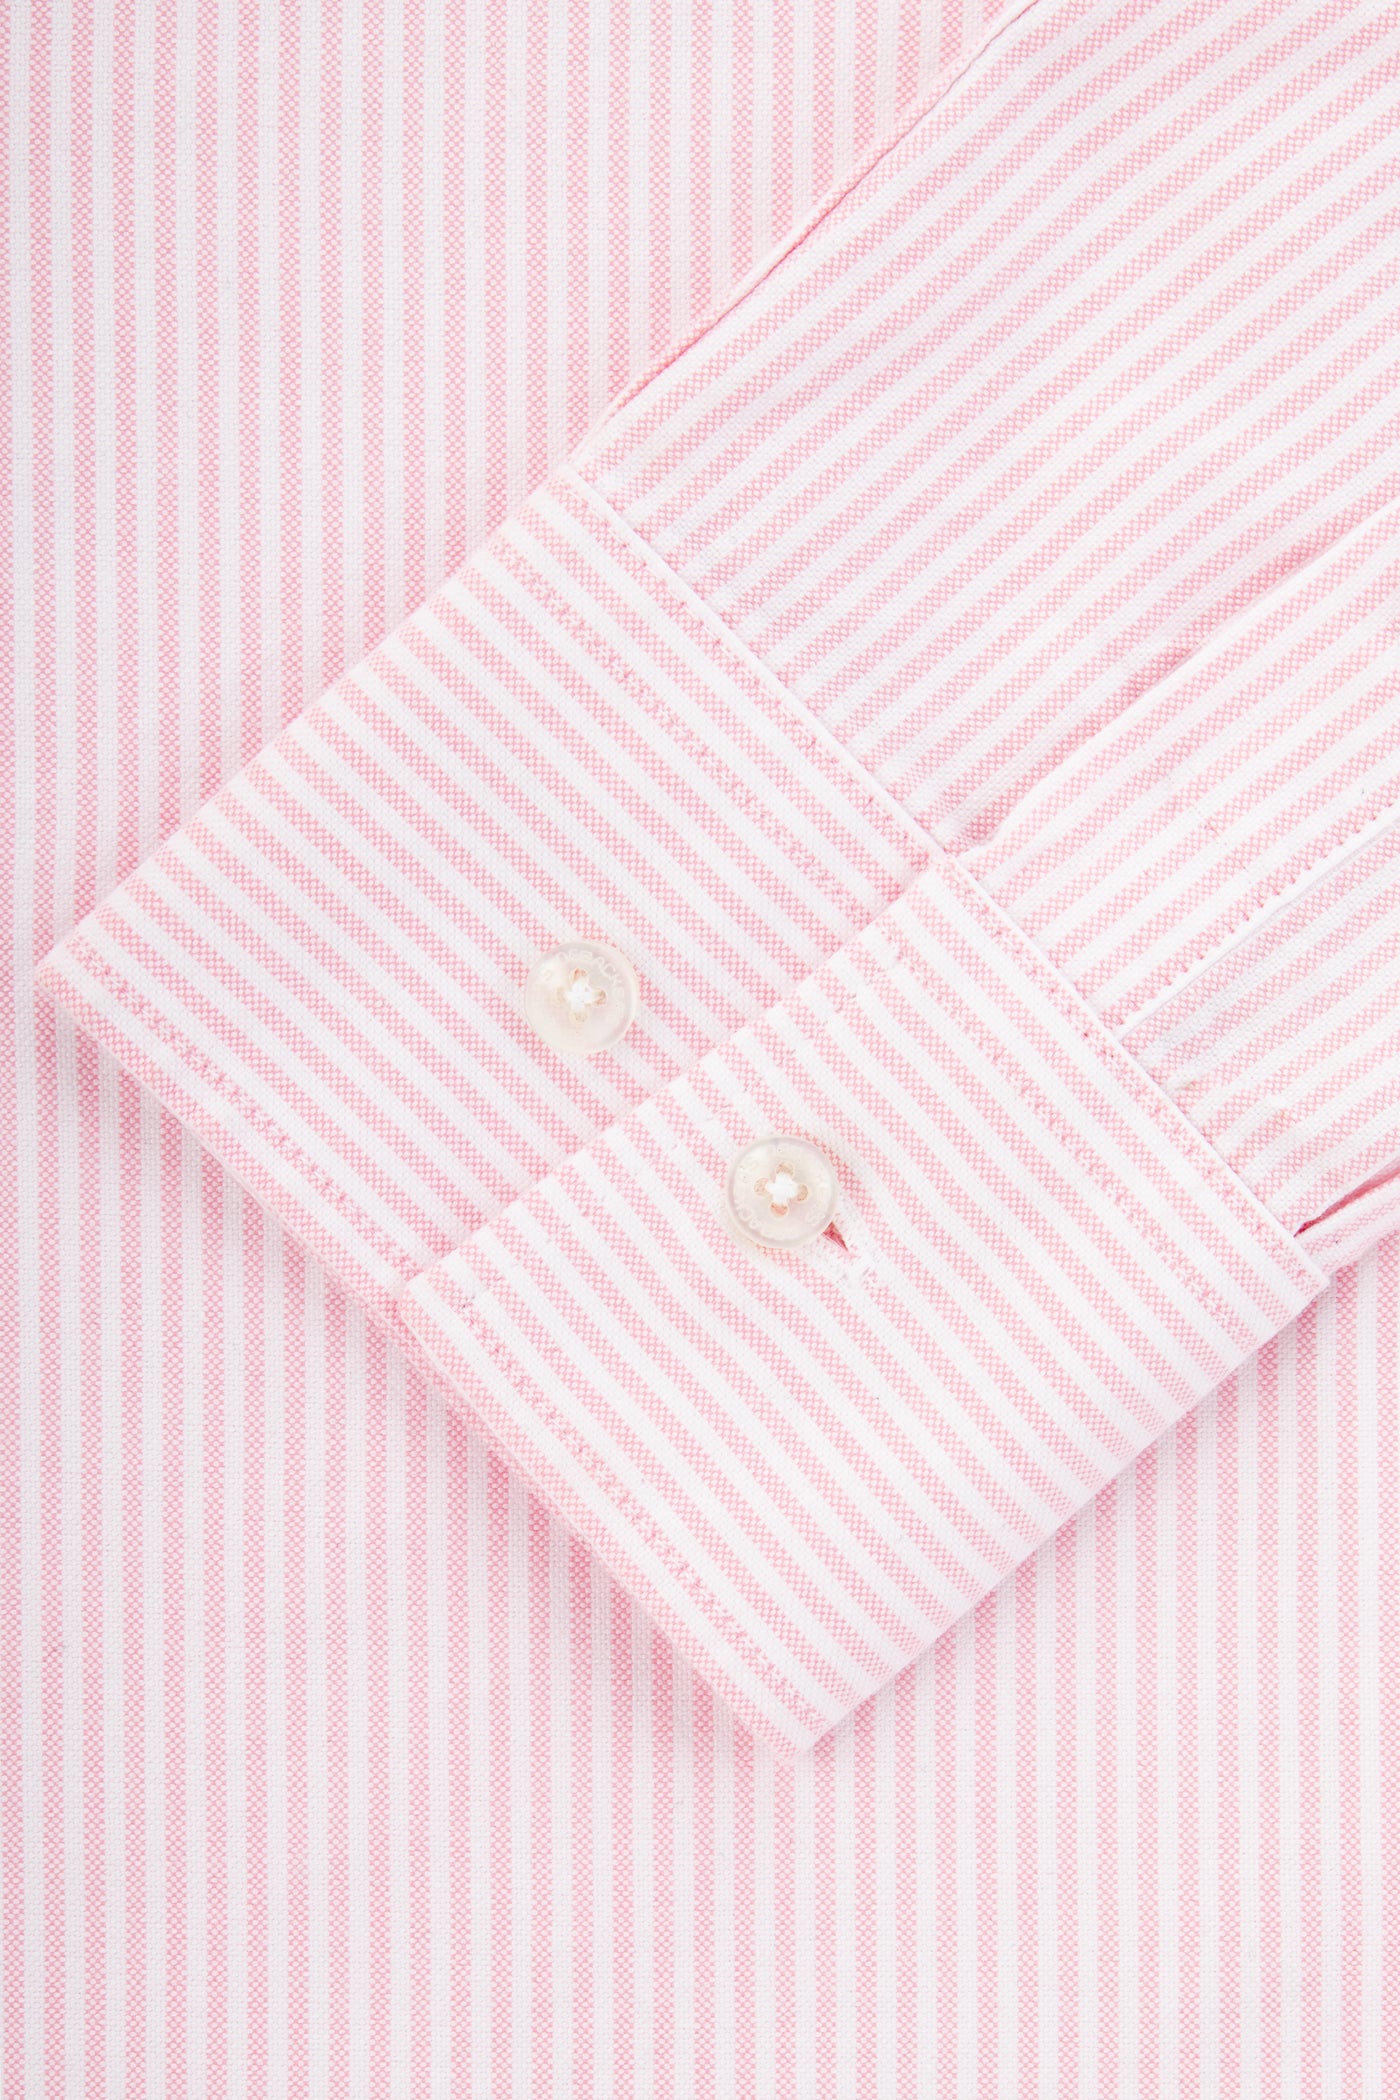 Striped Linen Look Lavender Blush Rose Casual Shirt